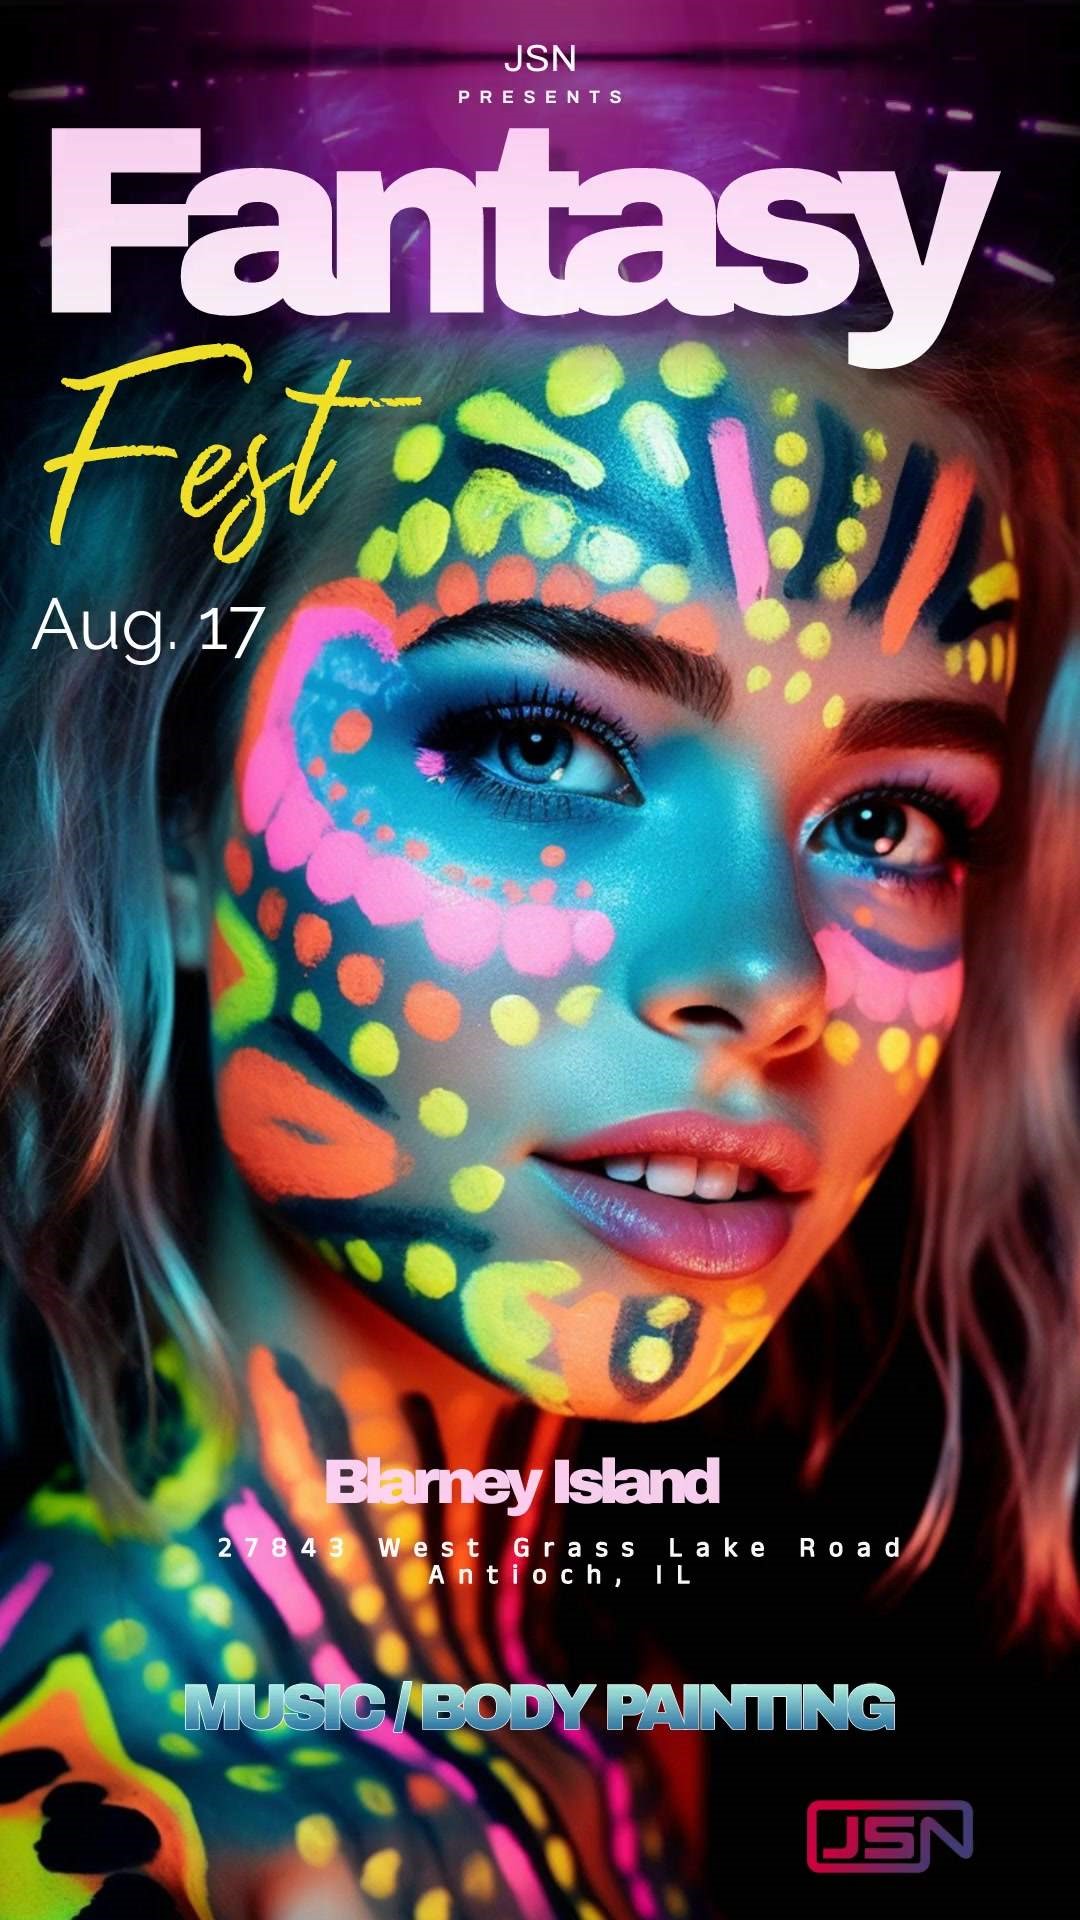 JSN invades Blarney Island Jen's Birthday / Fantasy Fest on Aug 17, 14:00@Blarney Island - Buy tickets and Get information on Jen's Social Networking 